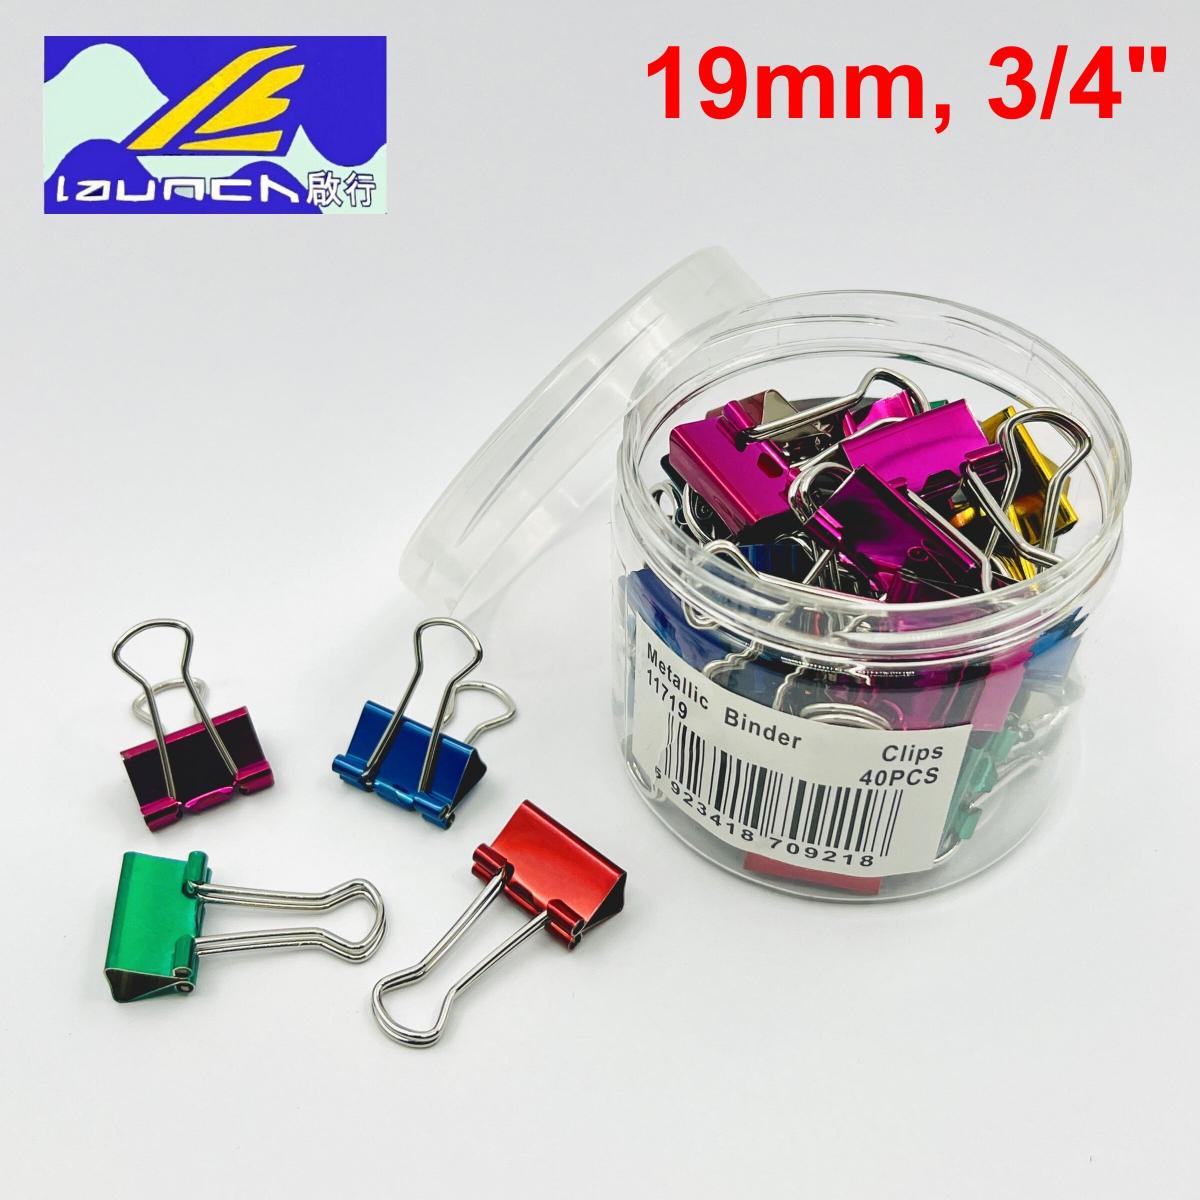 Launch® Metallic 3/4" Binder Clips, 40pcs. (5 Colors) #11719